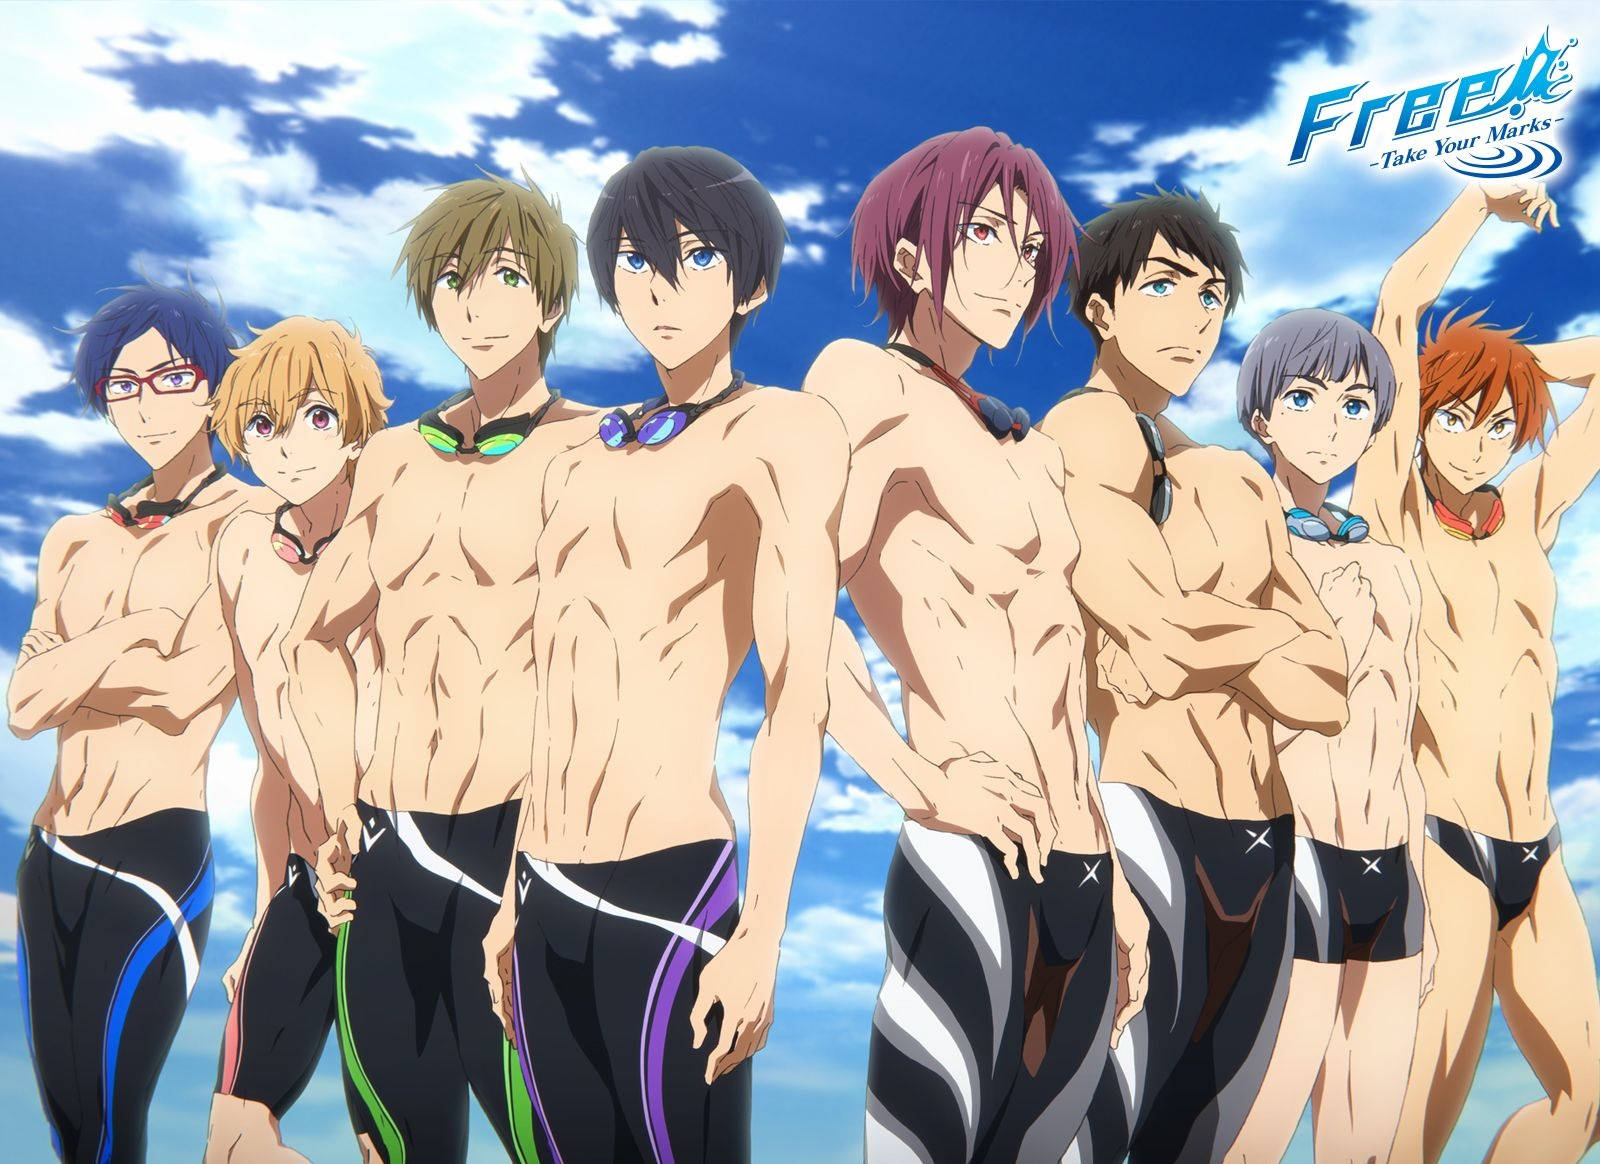 Free Iwatobi Swim Club Season One DVD Bluray Announced